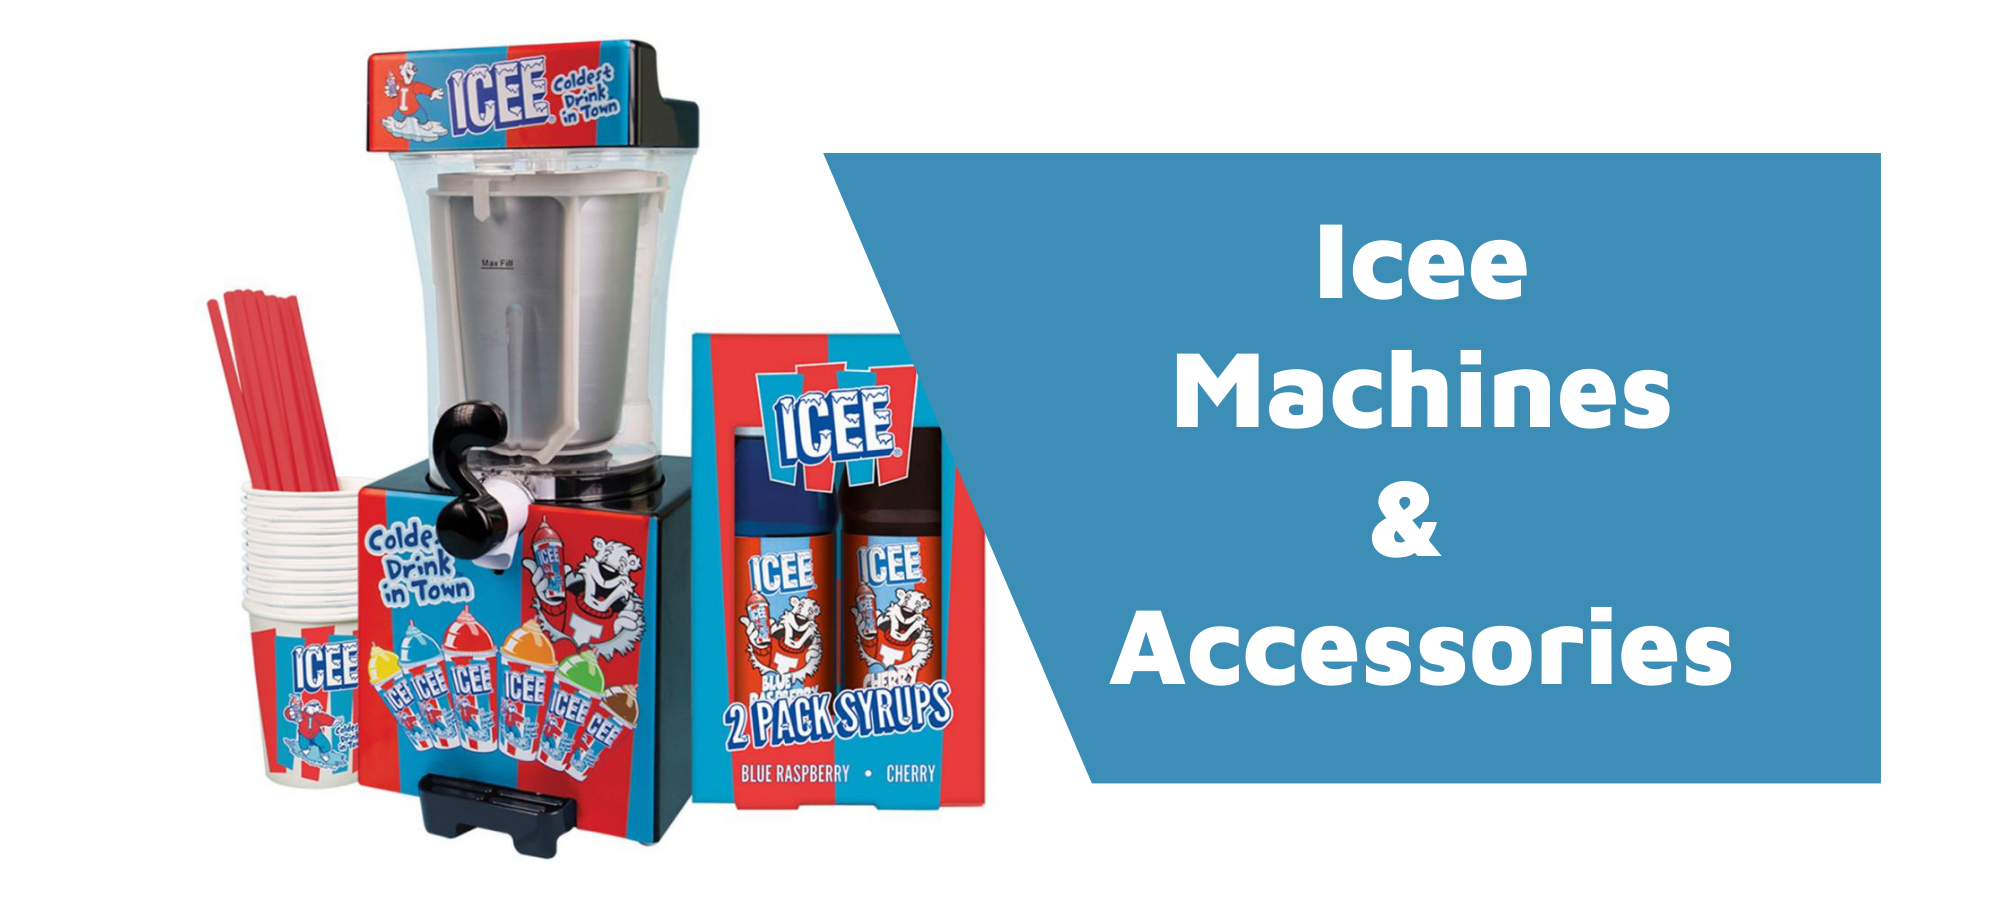 Icee Machines & Accessories